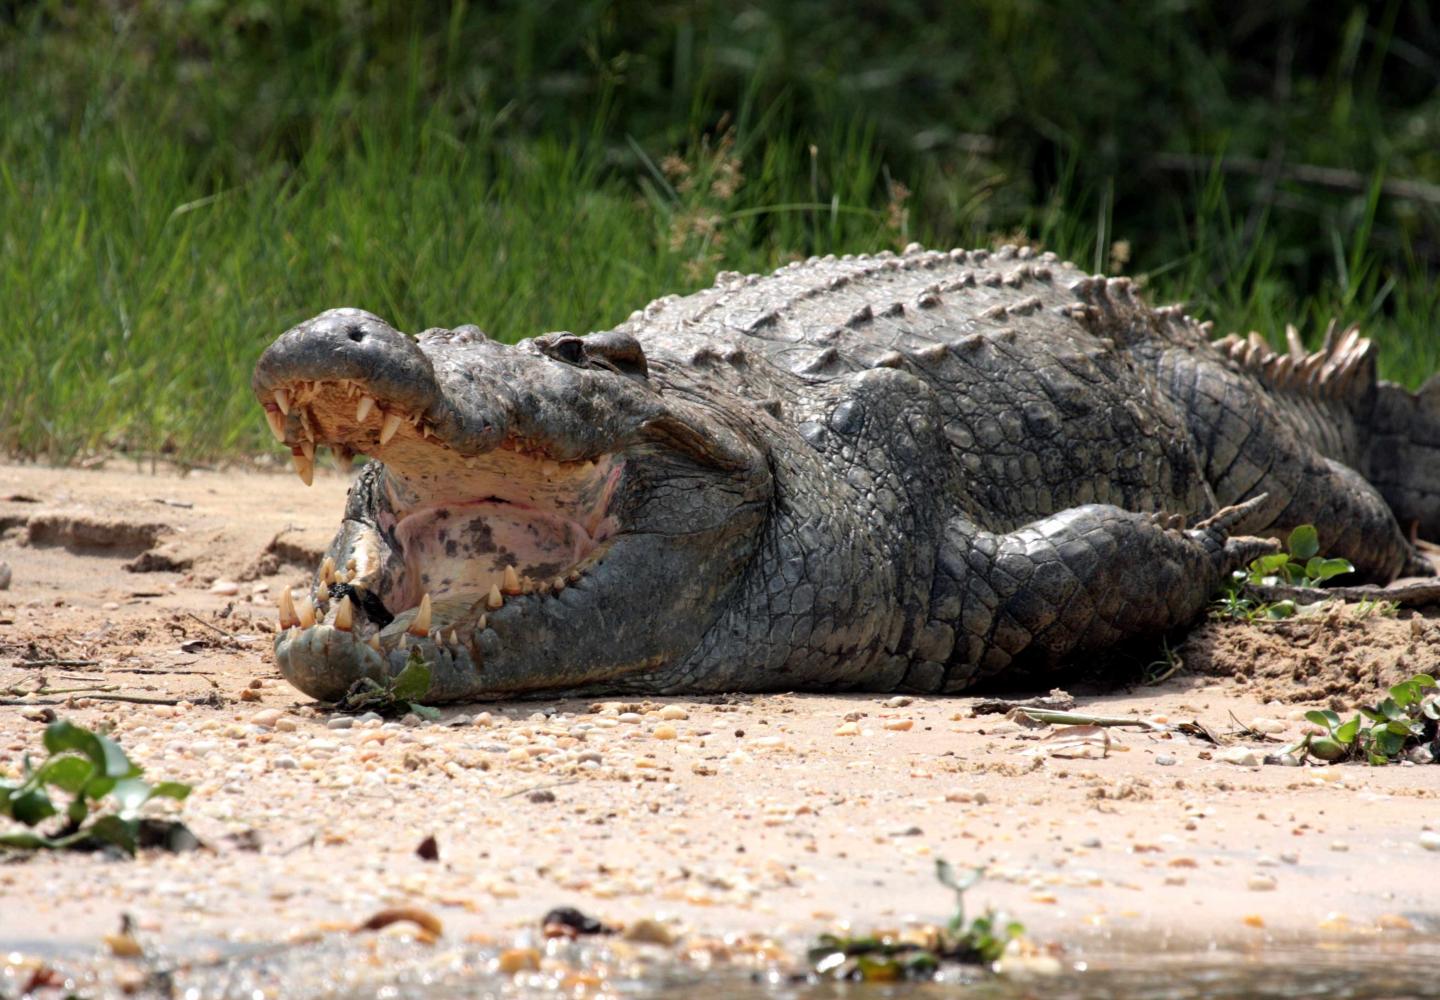 Nile Crocodile on the bank of the Victoria Nile (Murchison Falls Uganda)